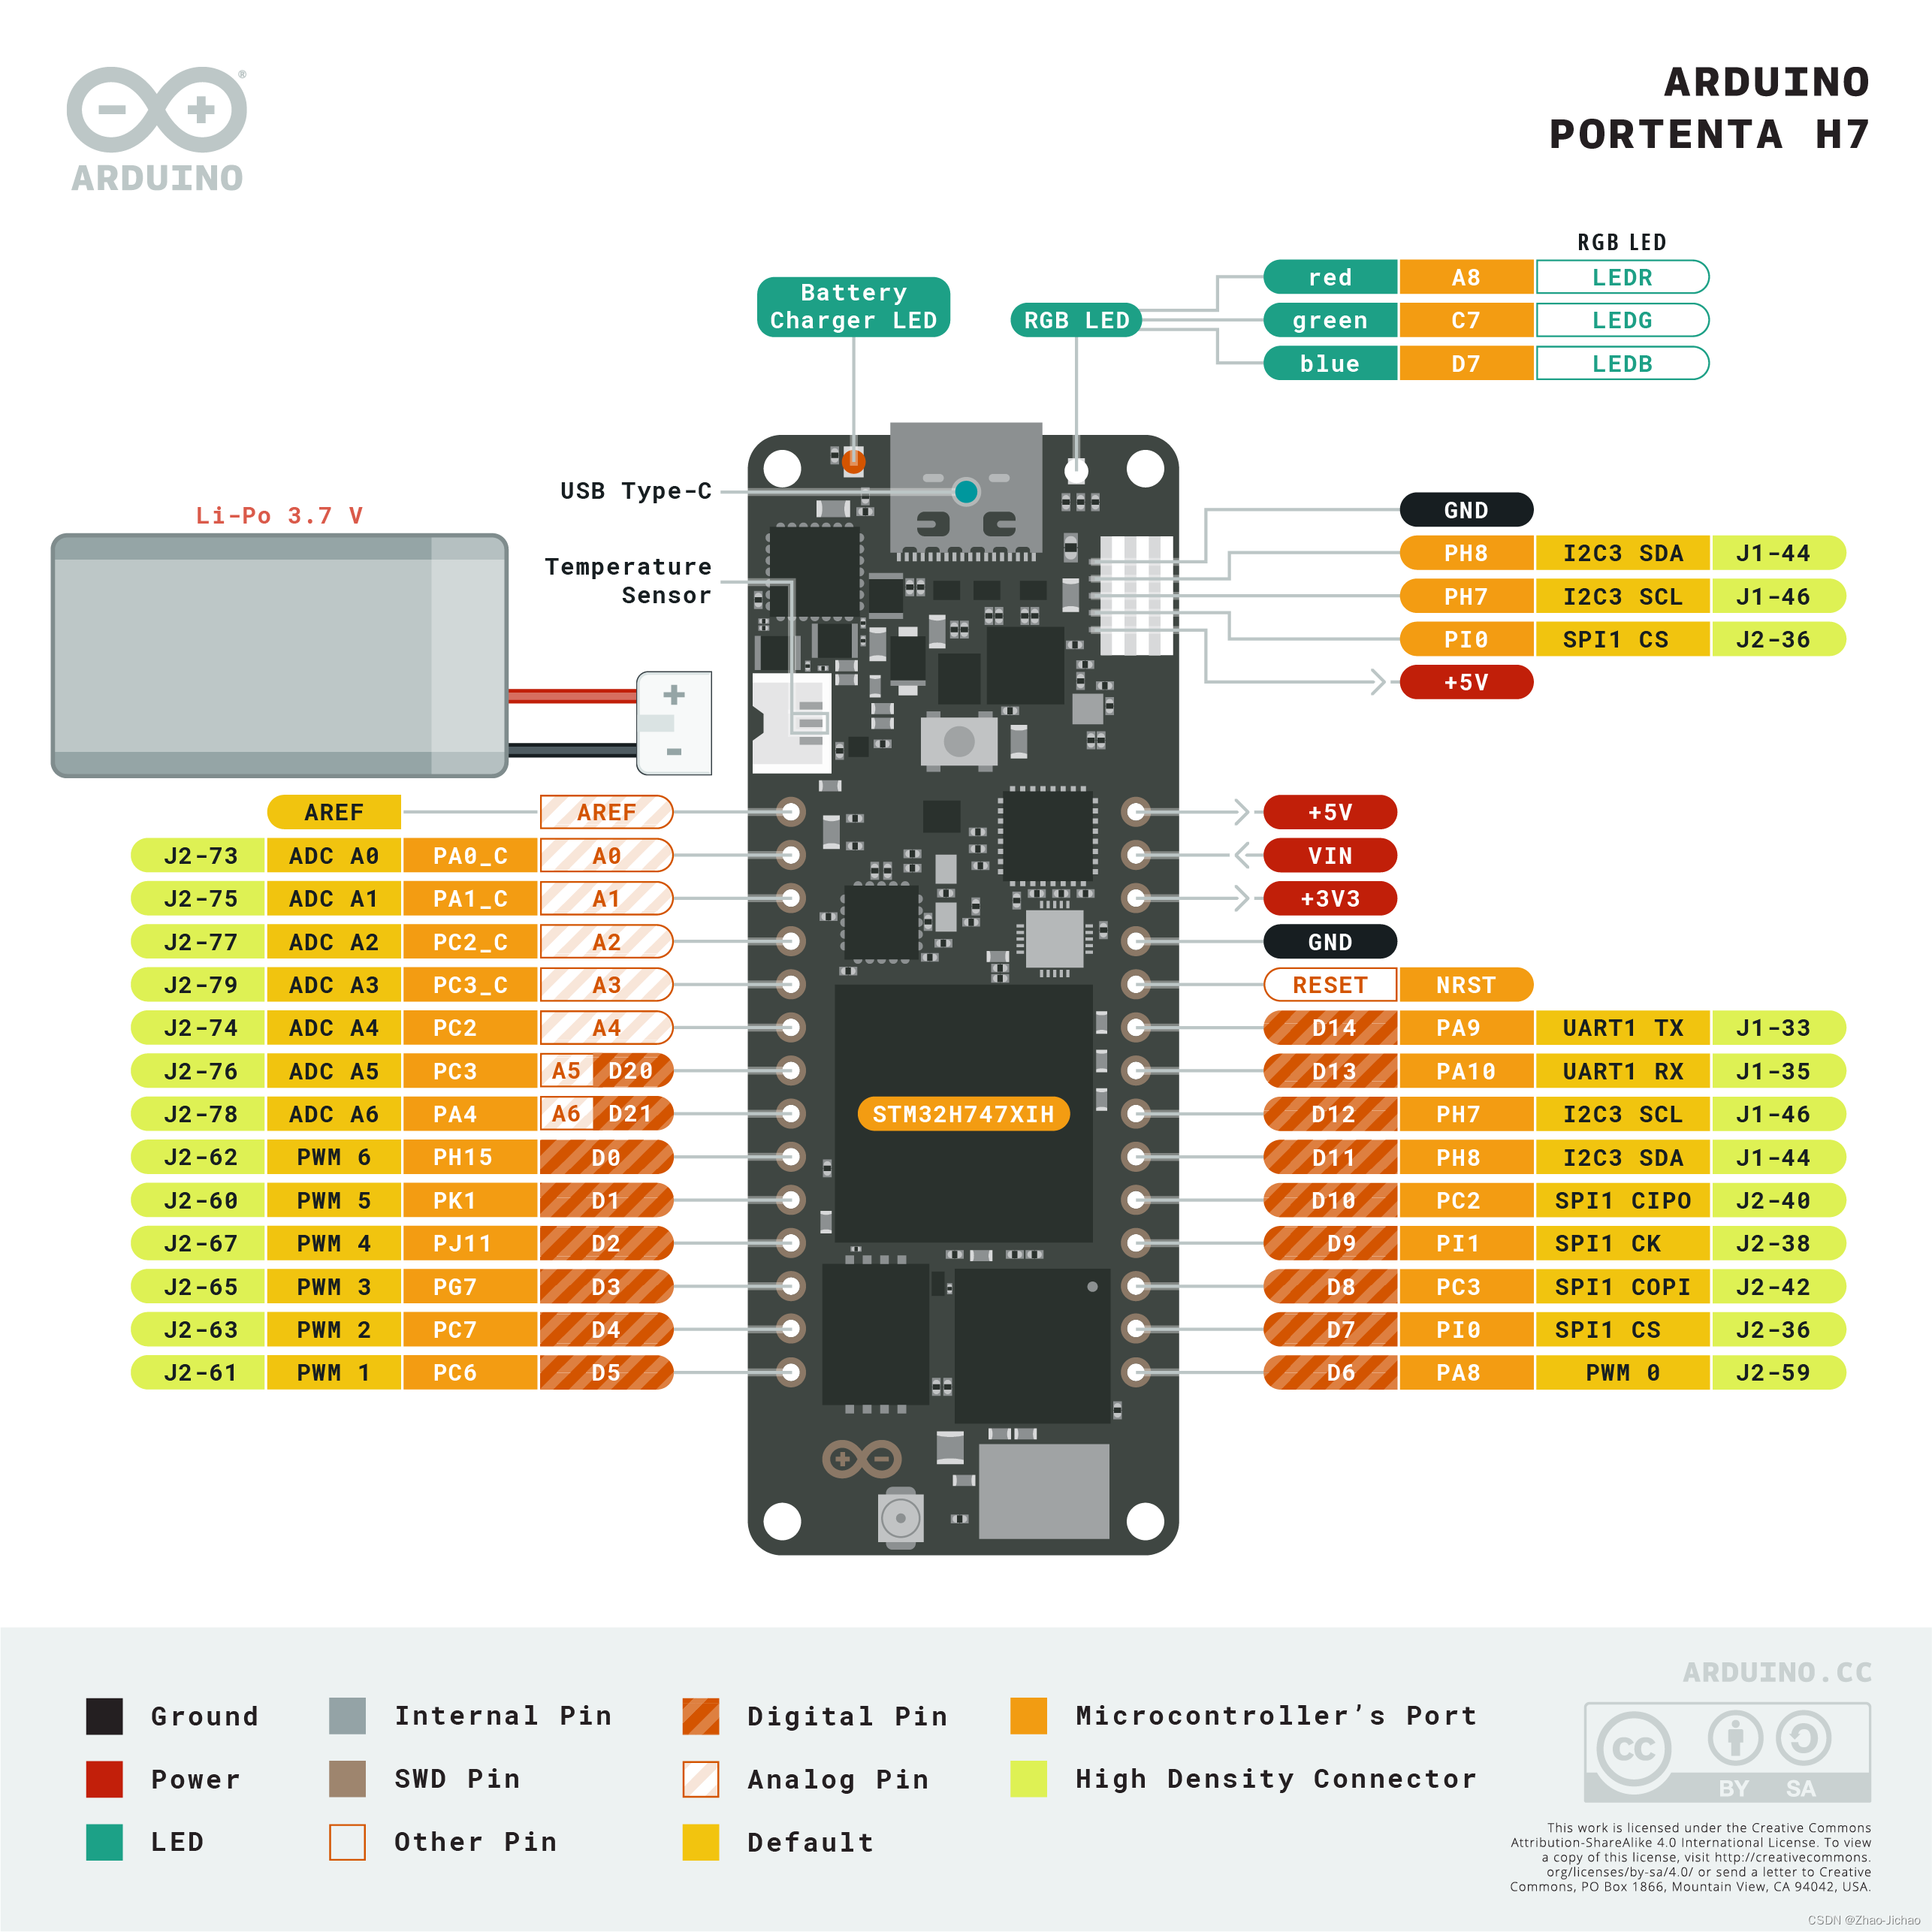 【Arduino】Portenta H7 板子介绍